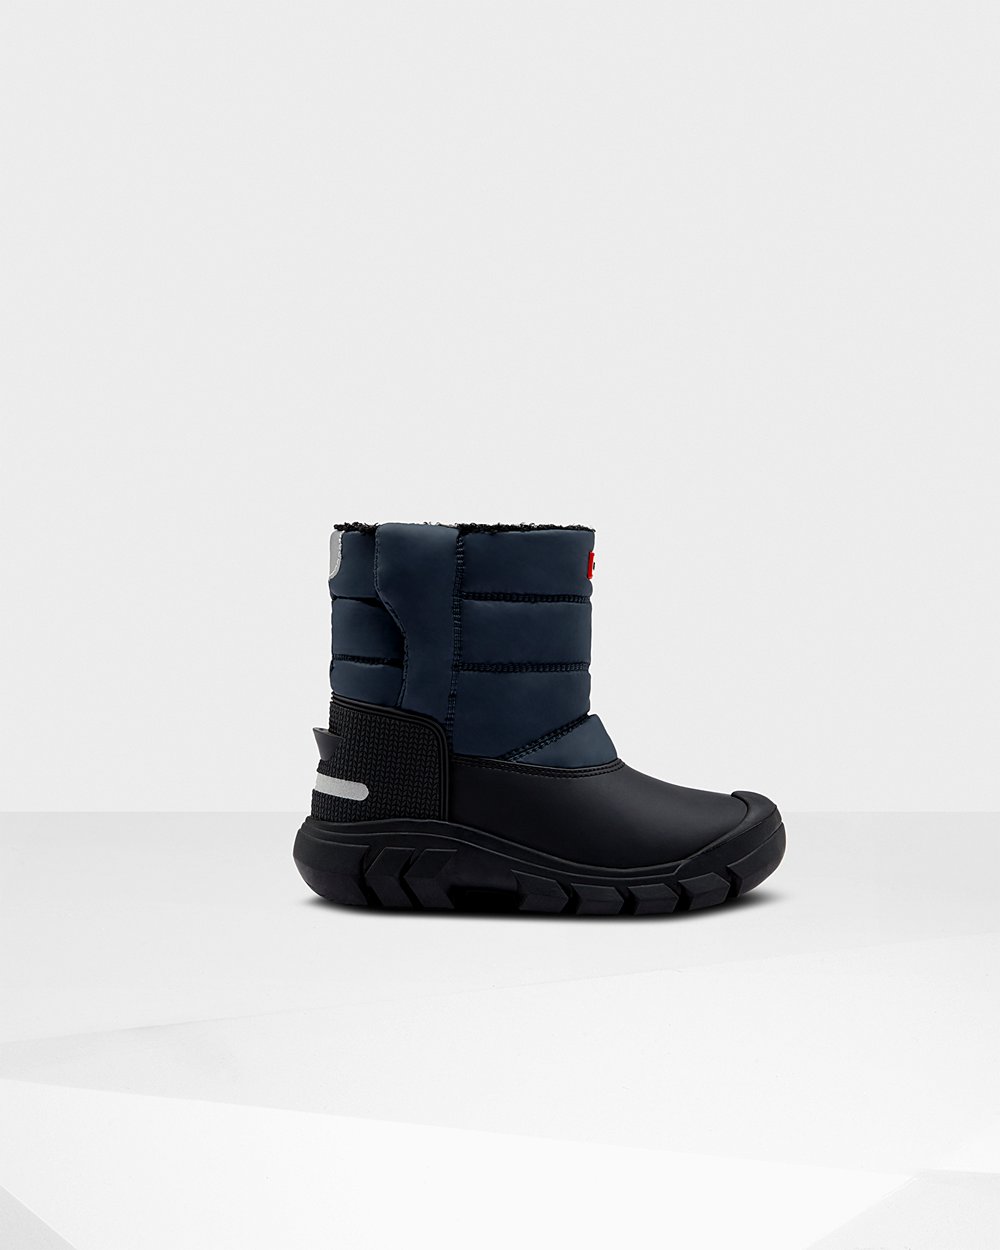 Kids Snow Boots - Hunter Original Big Insulated (17YOGSENH) - Navy/Black